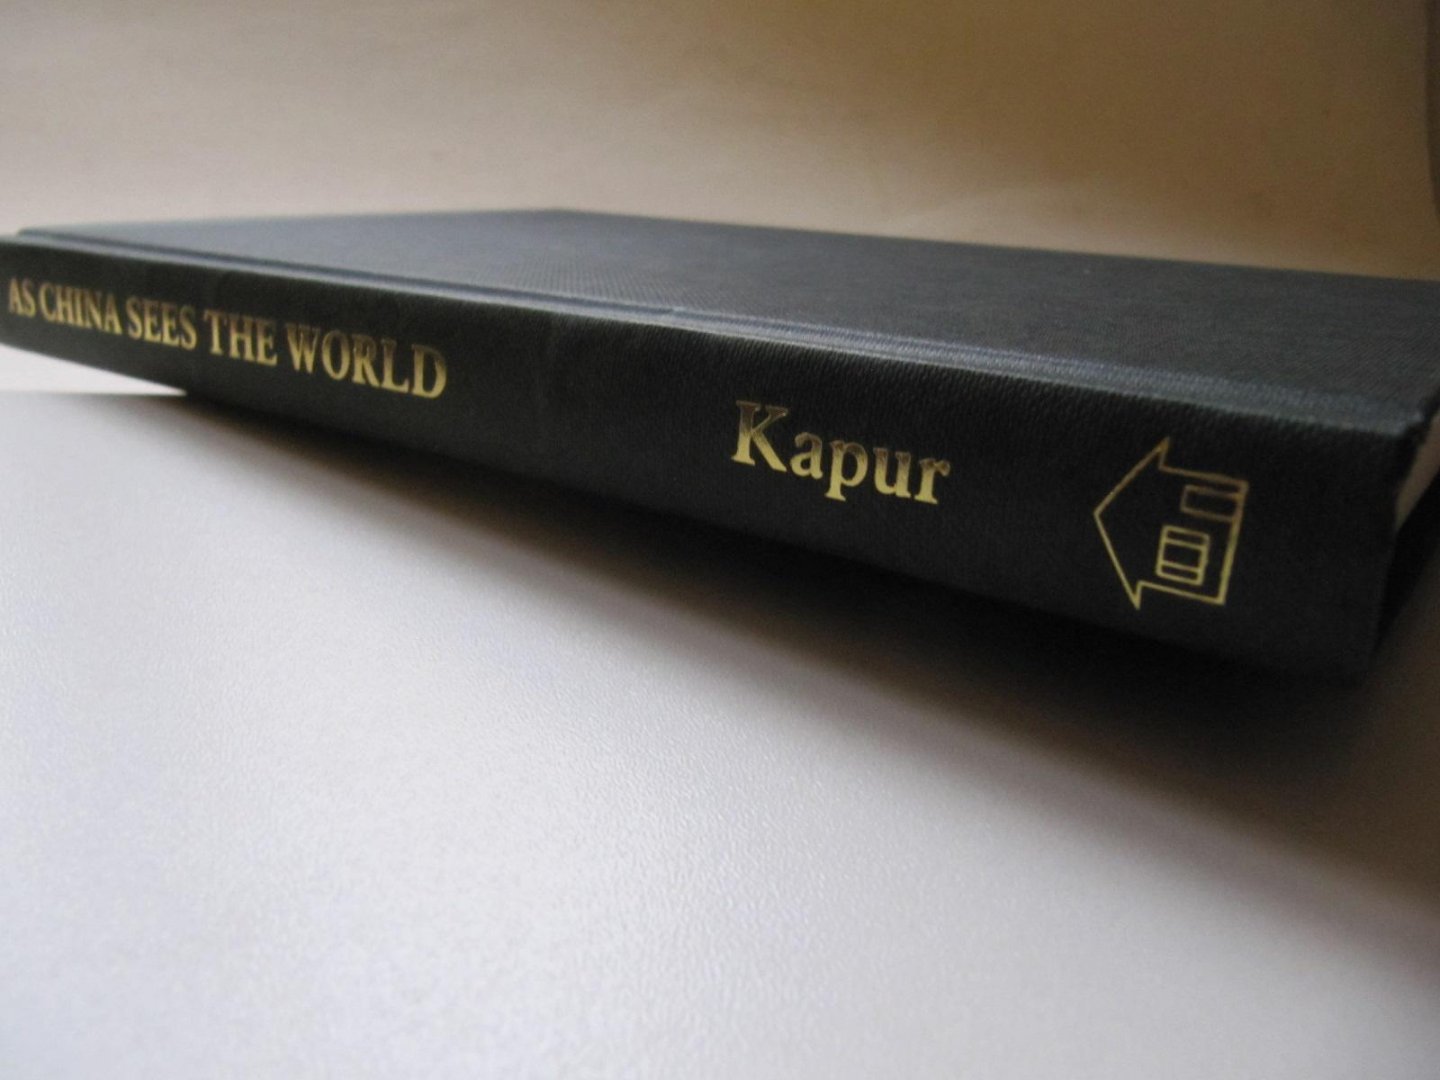 Harsh Kapur - As China Sees the World